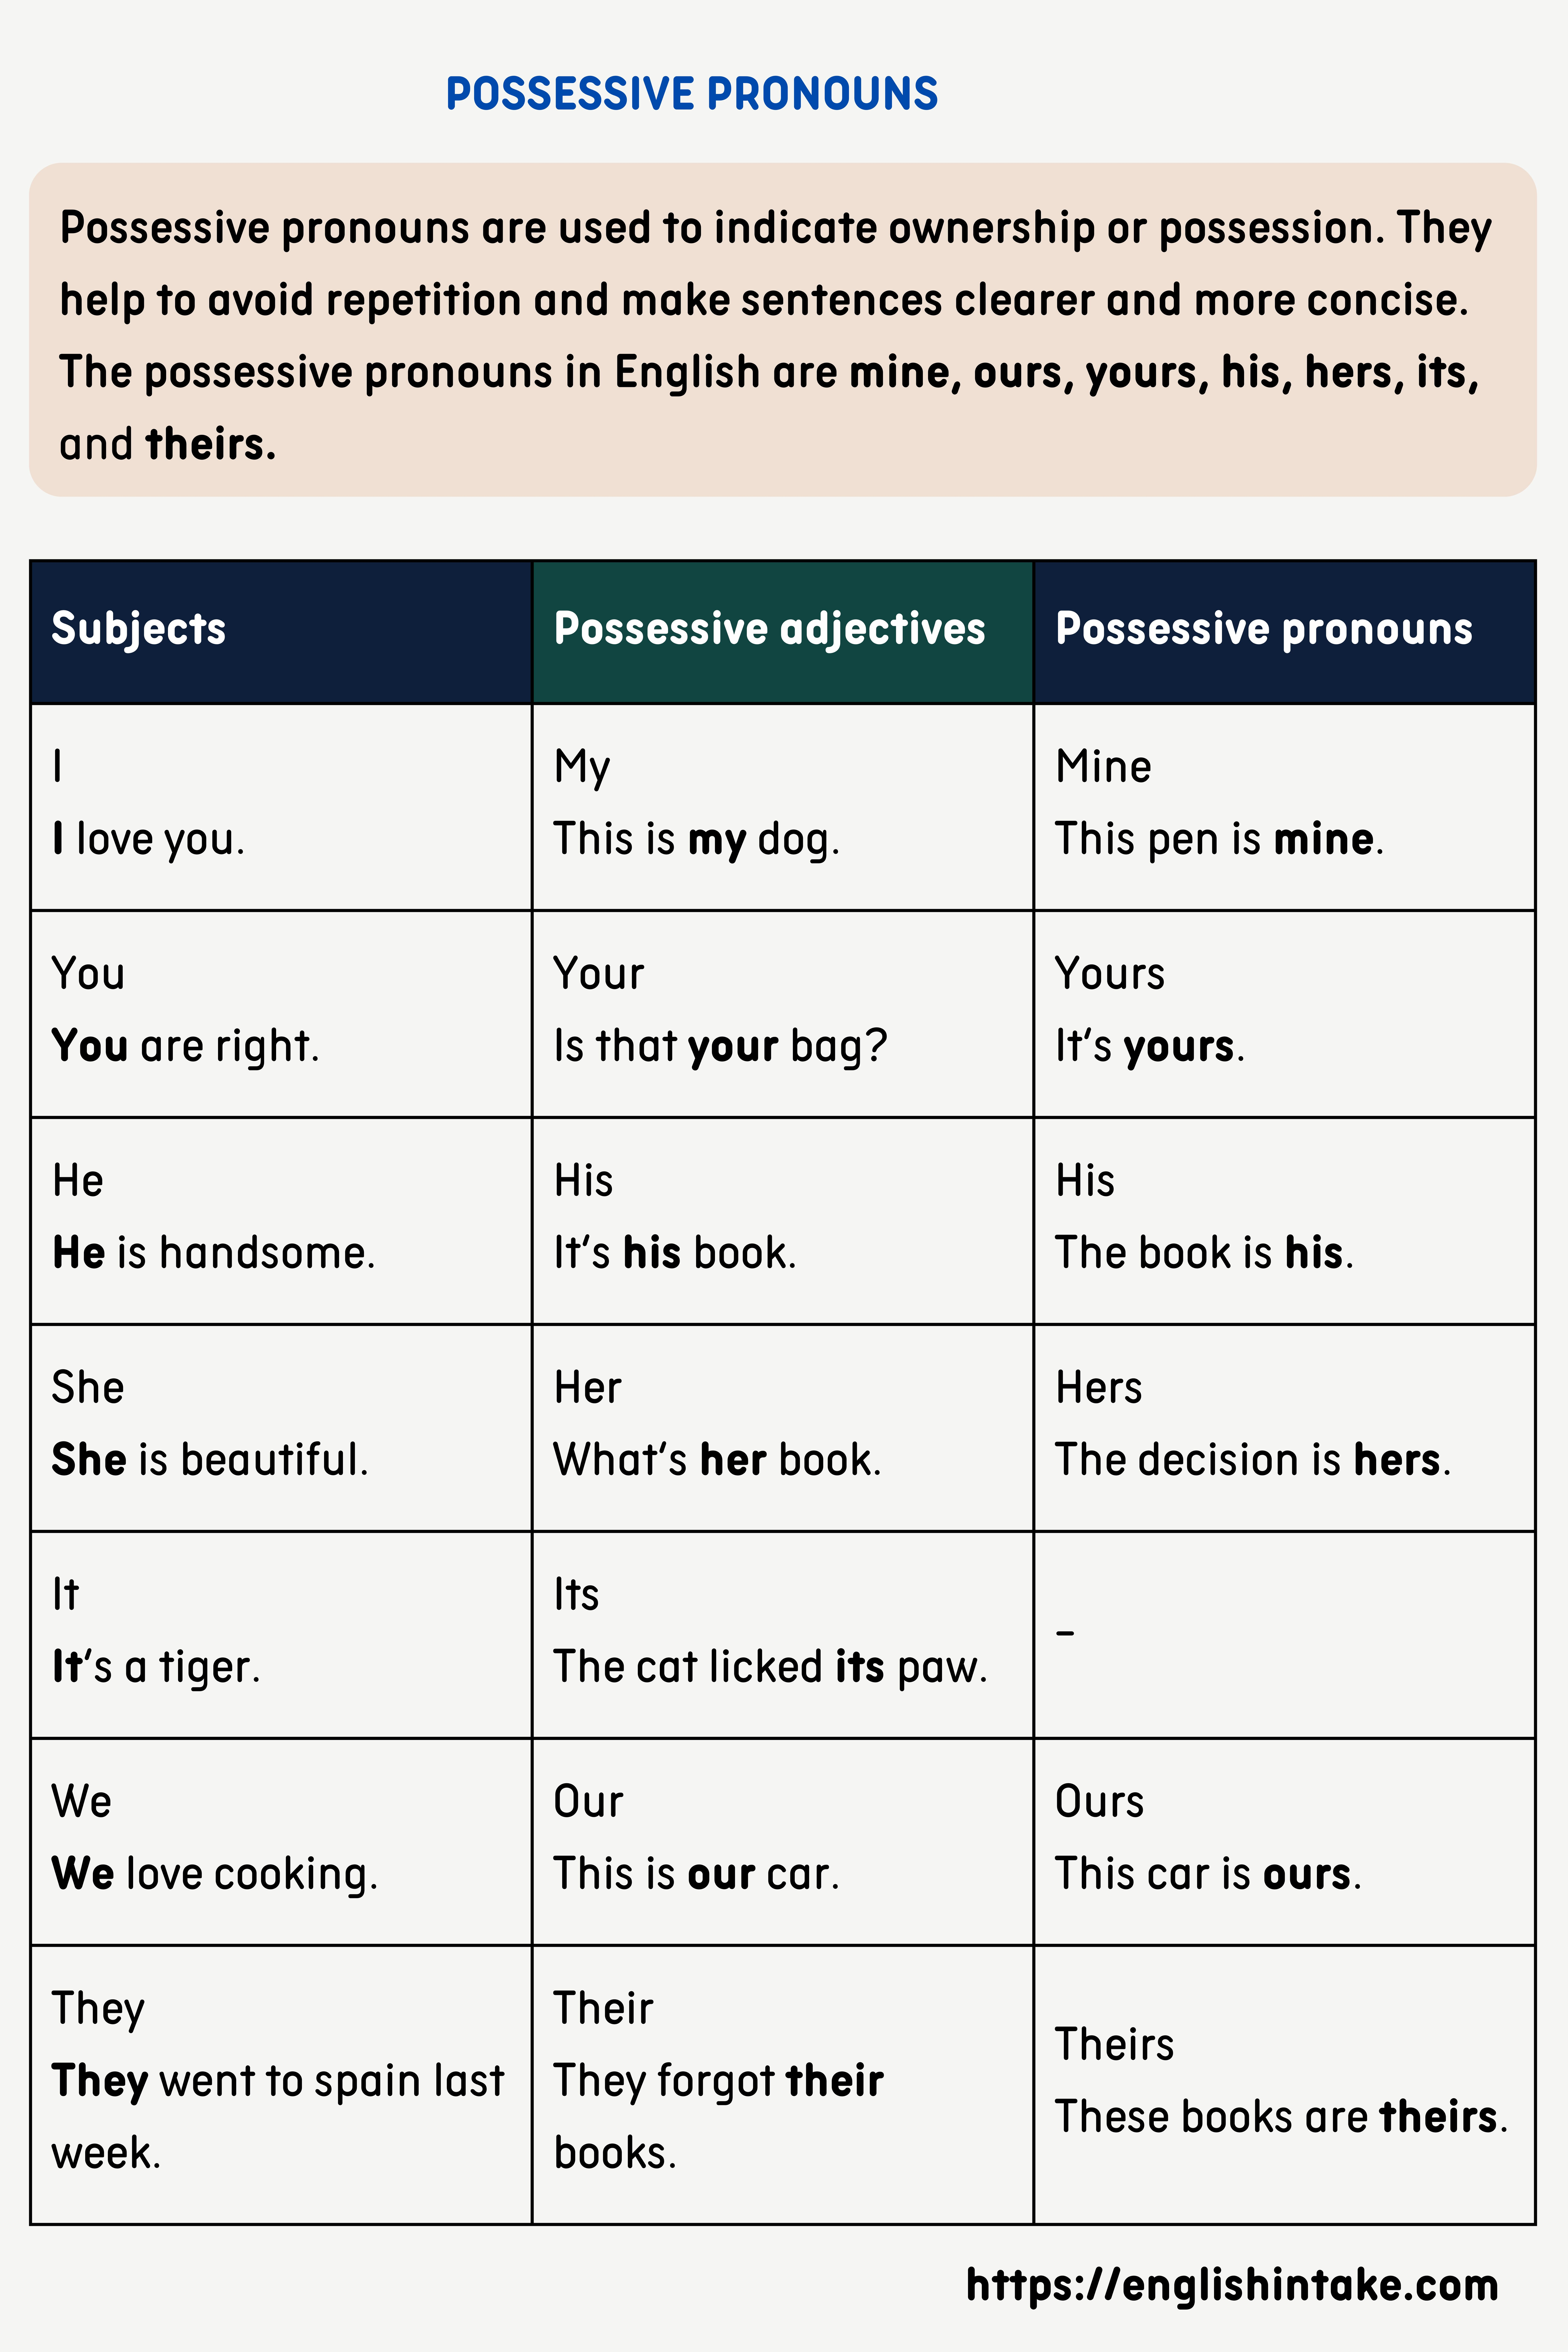 Table summarising possessive adjectives and possessive pronouns